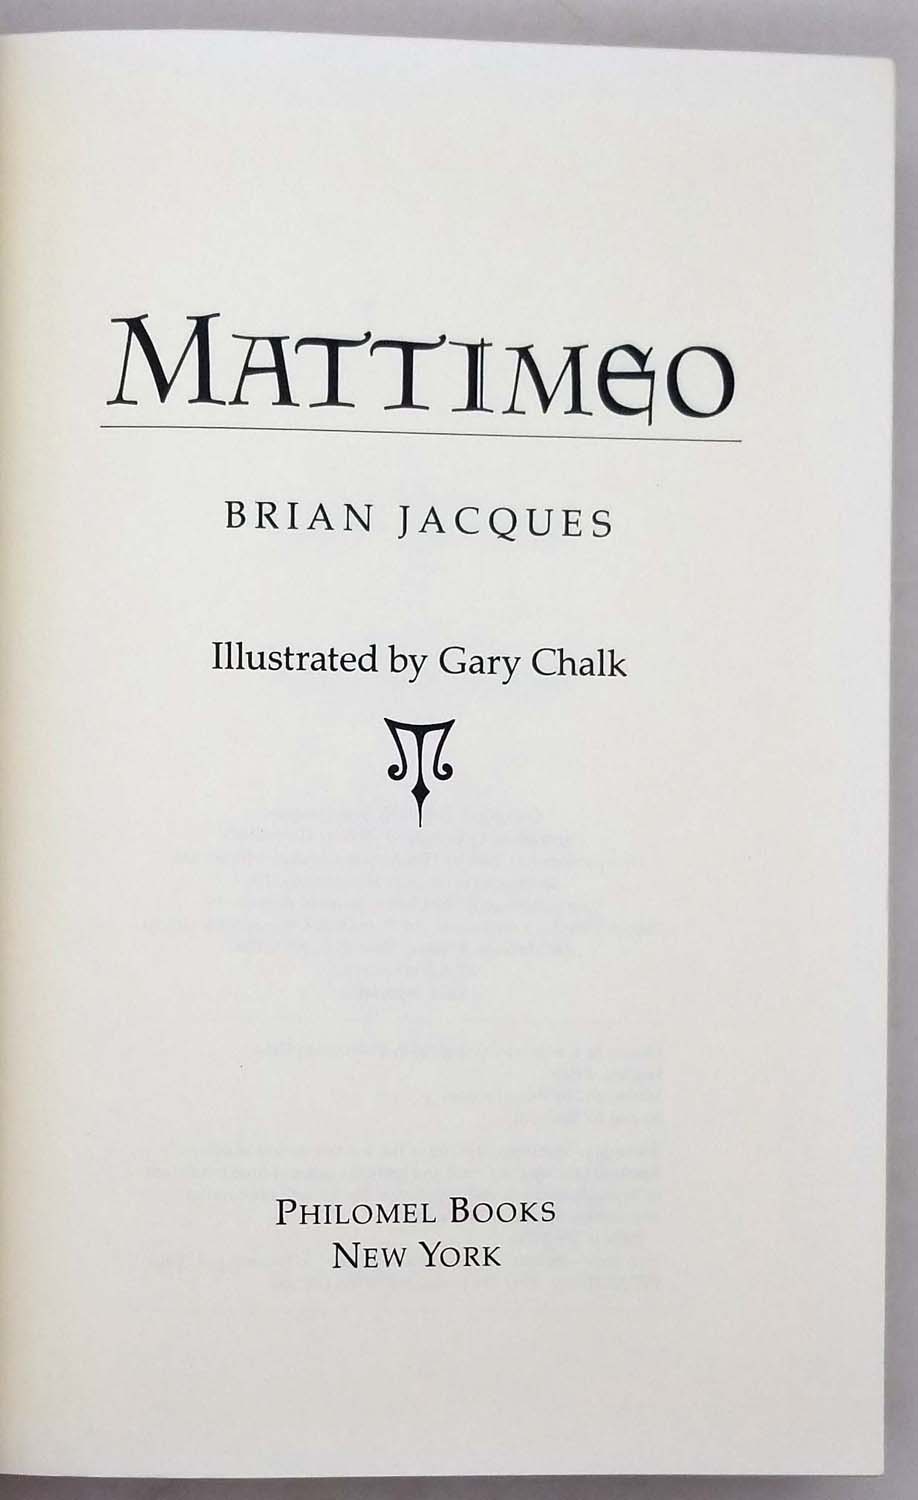 Mattimeo - Brian Jacques 1990 | 1st Edition